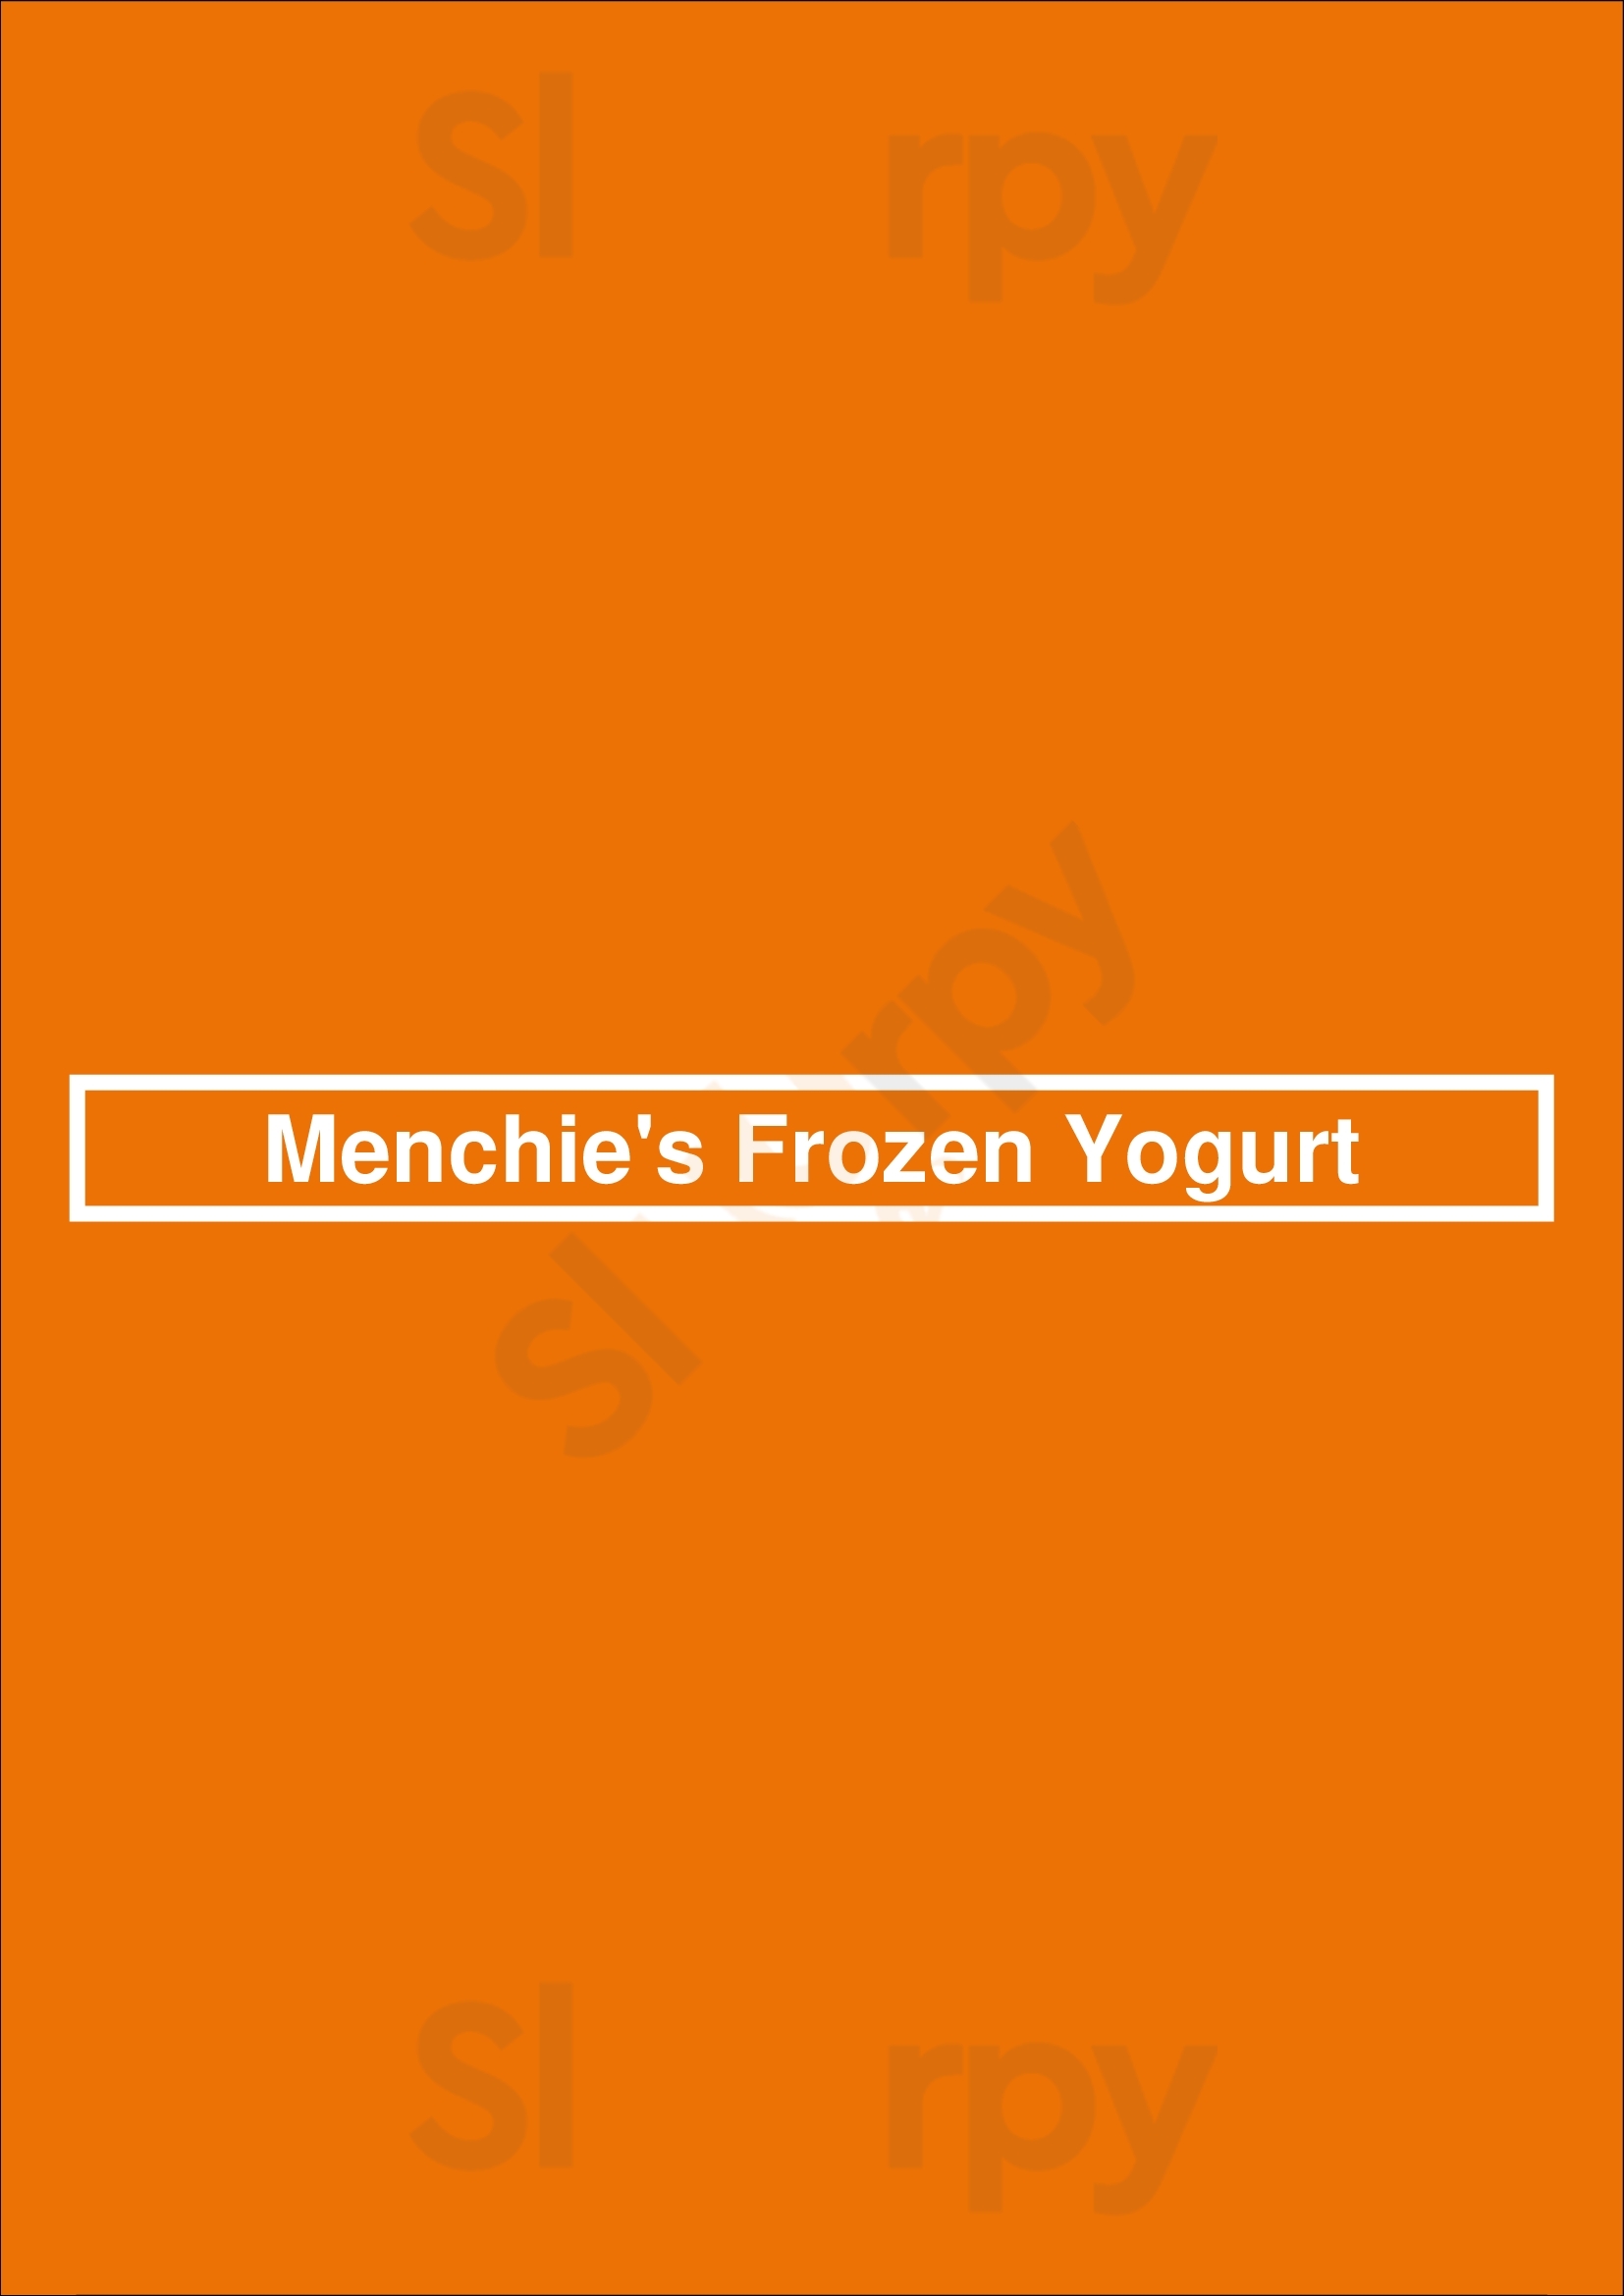 Menchie's Frozen Yogurt Orlando Menu - 1